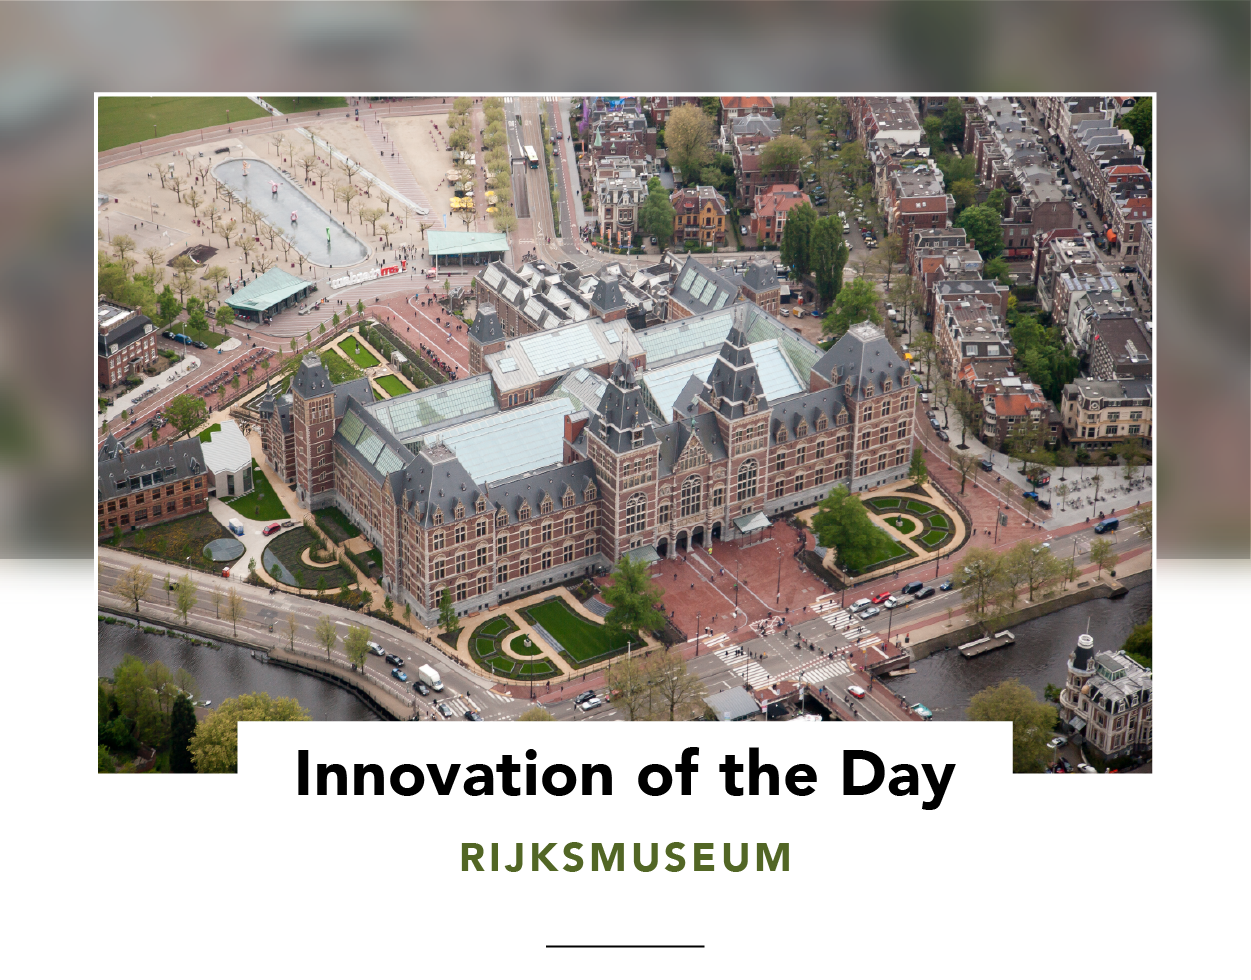 Birds-eye view of the Rijksmuseum